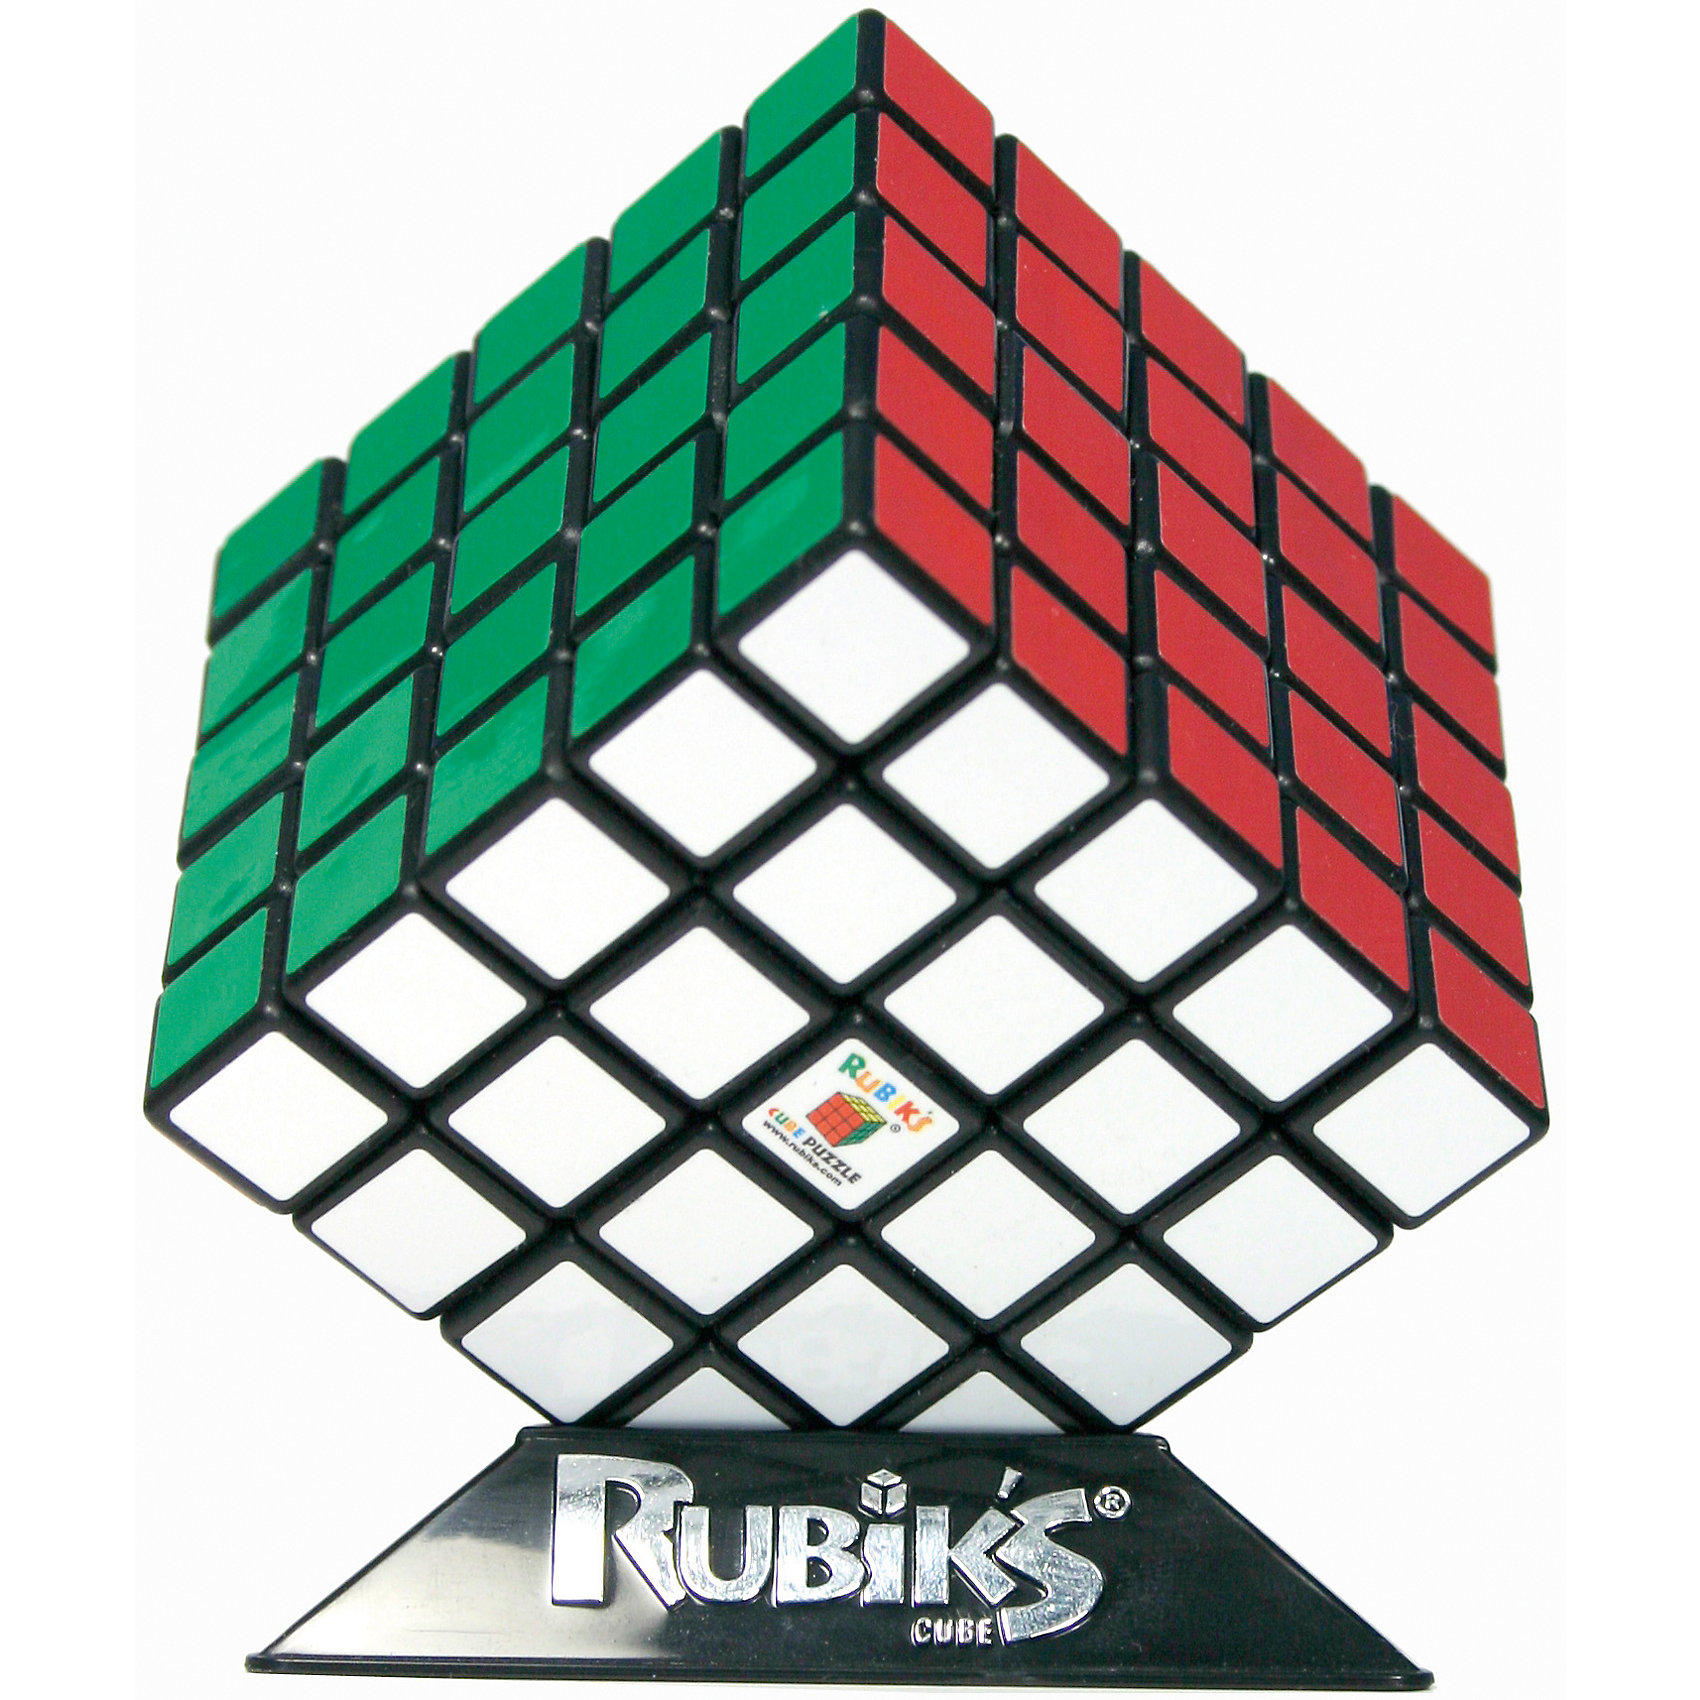 фото Кубик Рубика 5х5, Rubik's